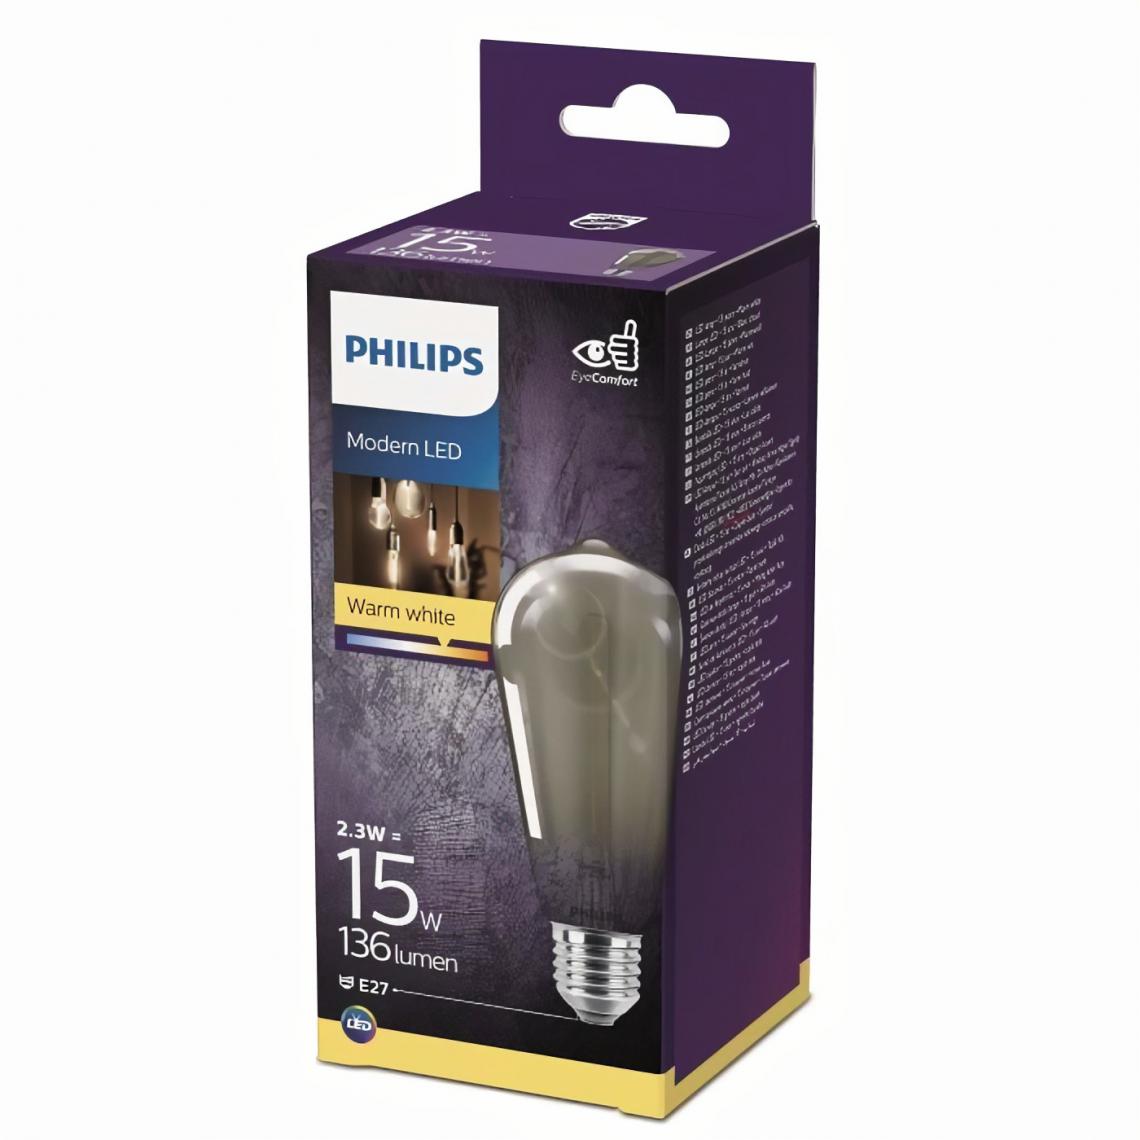 Philips - PHILIPS Ampoule LED Standard Edison Modern Filament Mini Smoky - 3-15 W - Blanc chaud - Ampoules LED